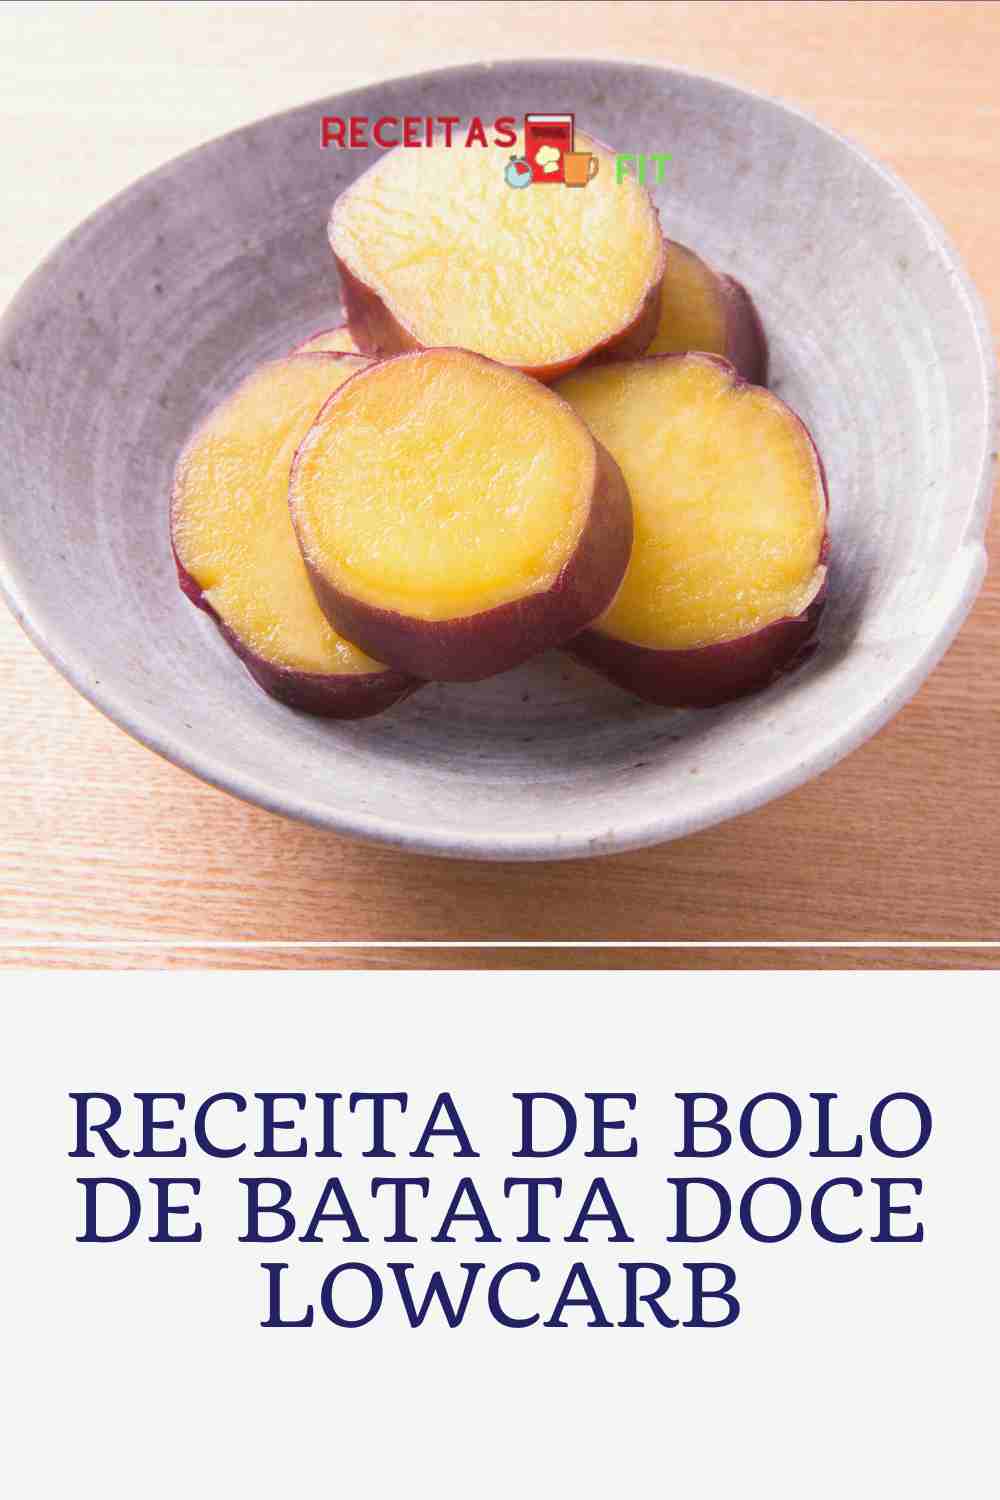 You are currently viewing Receita de bolo de batata doce lowcarb